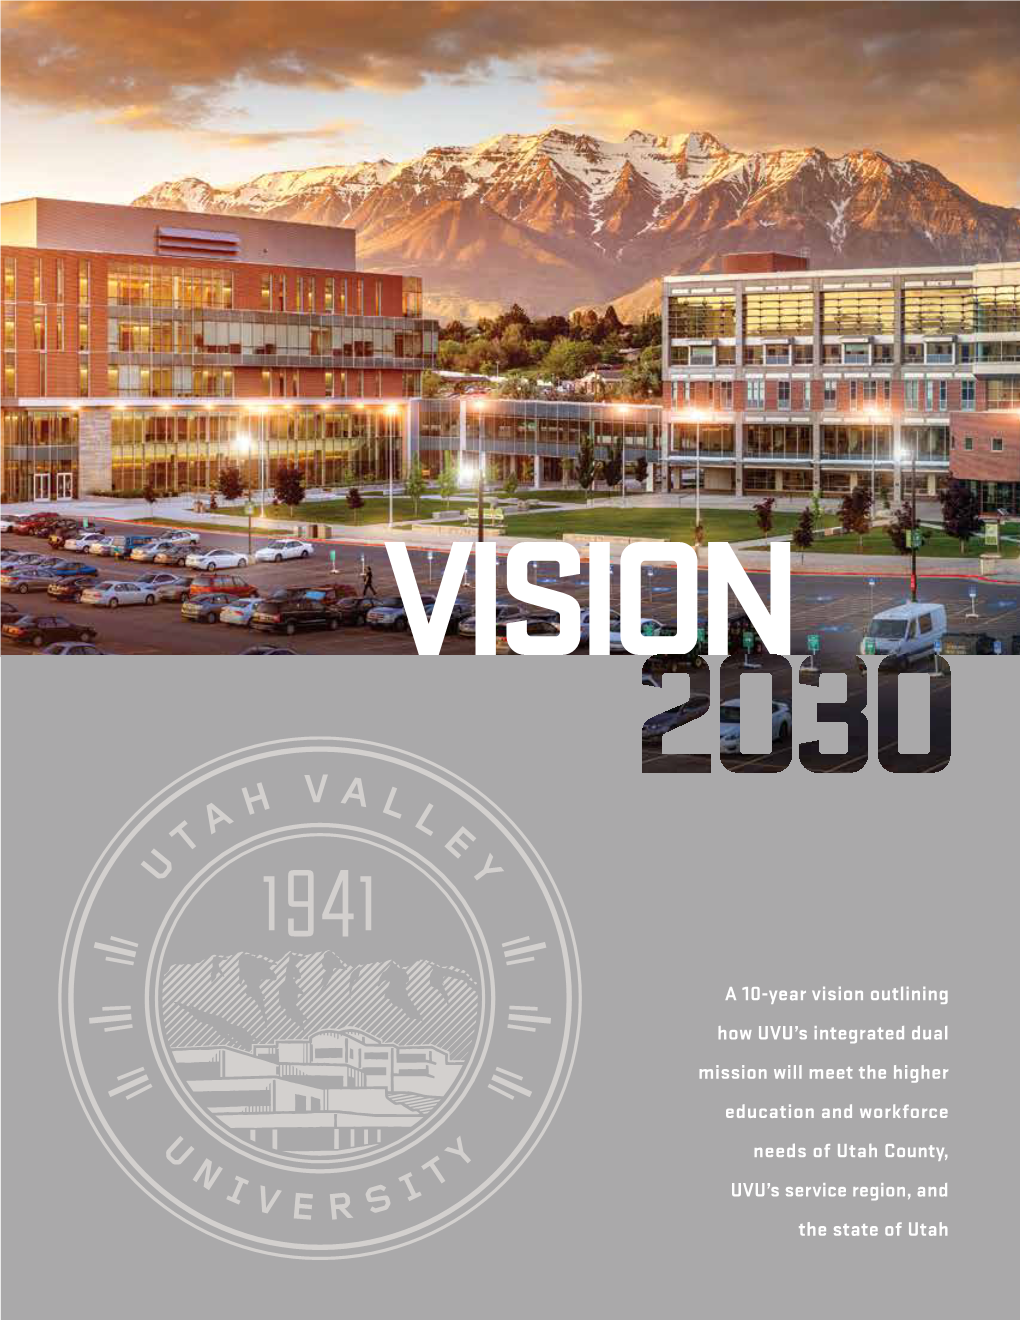 Vision 2030 | Utah Vally University 1 1 Utah Vally University | Vision 2030 Vision 2030 | Utah Vally University 1 Mission Statement